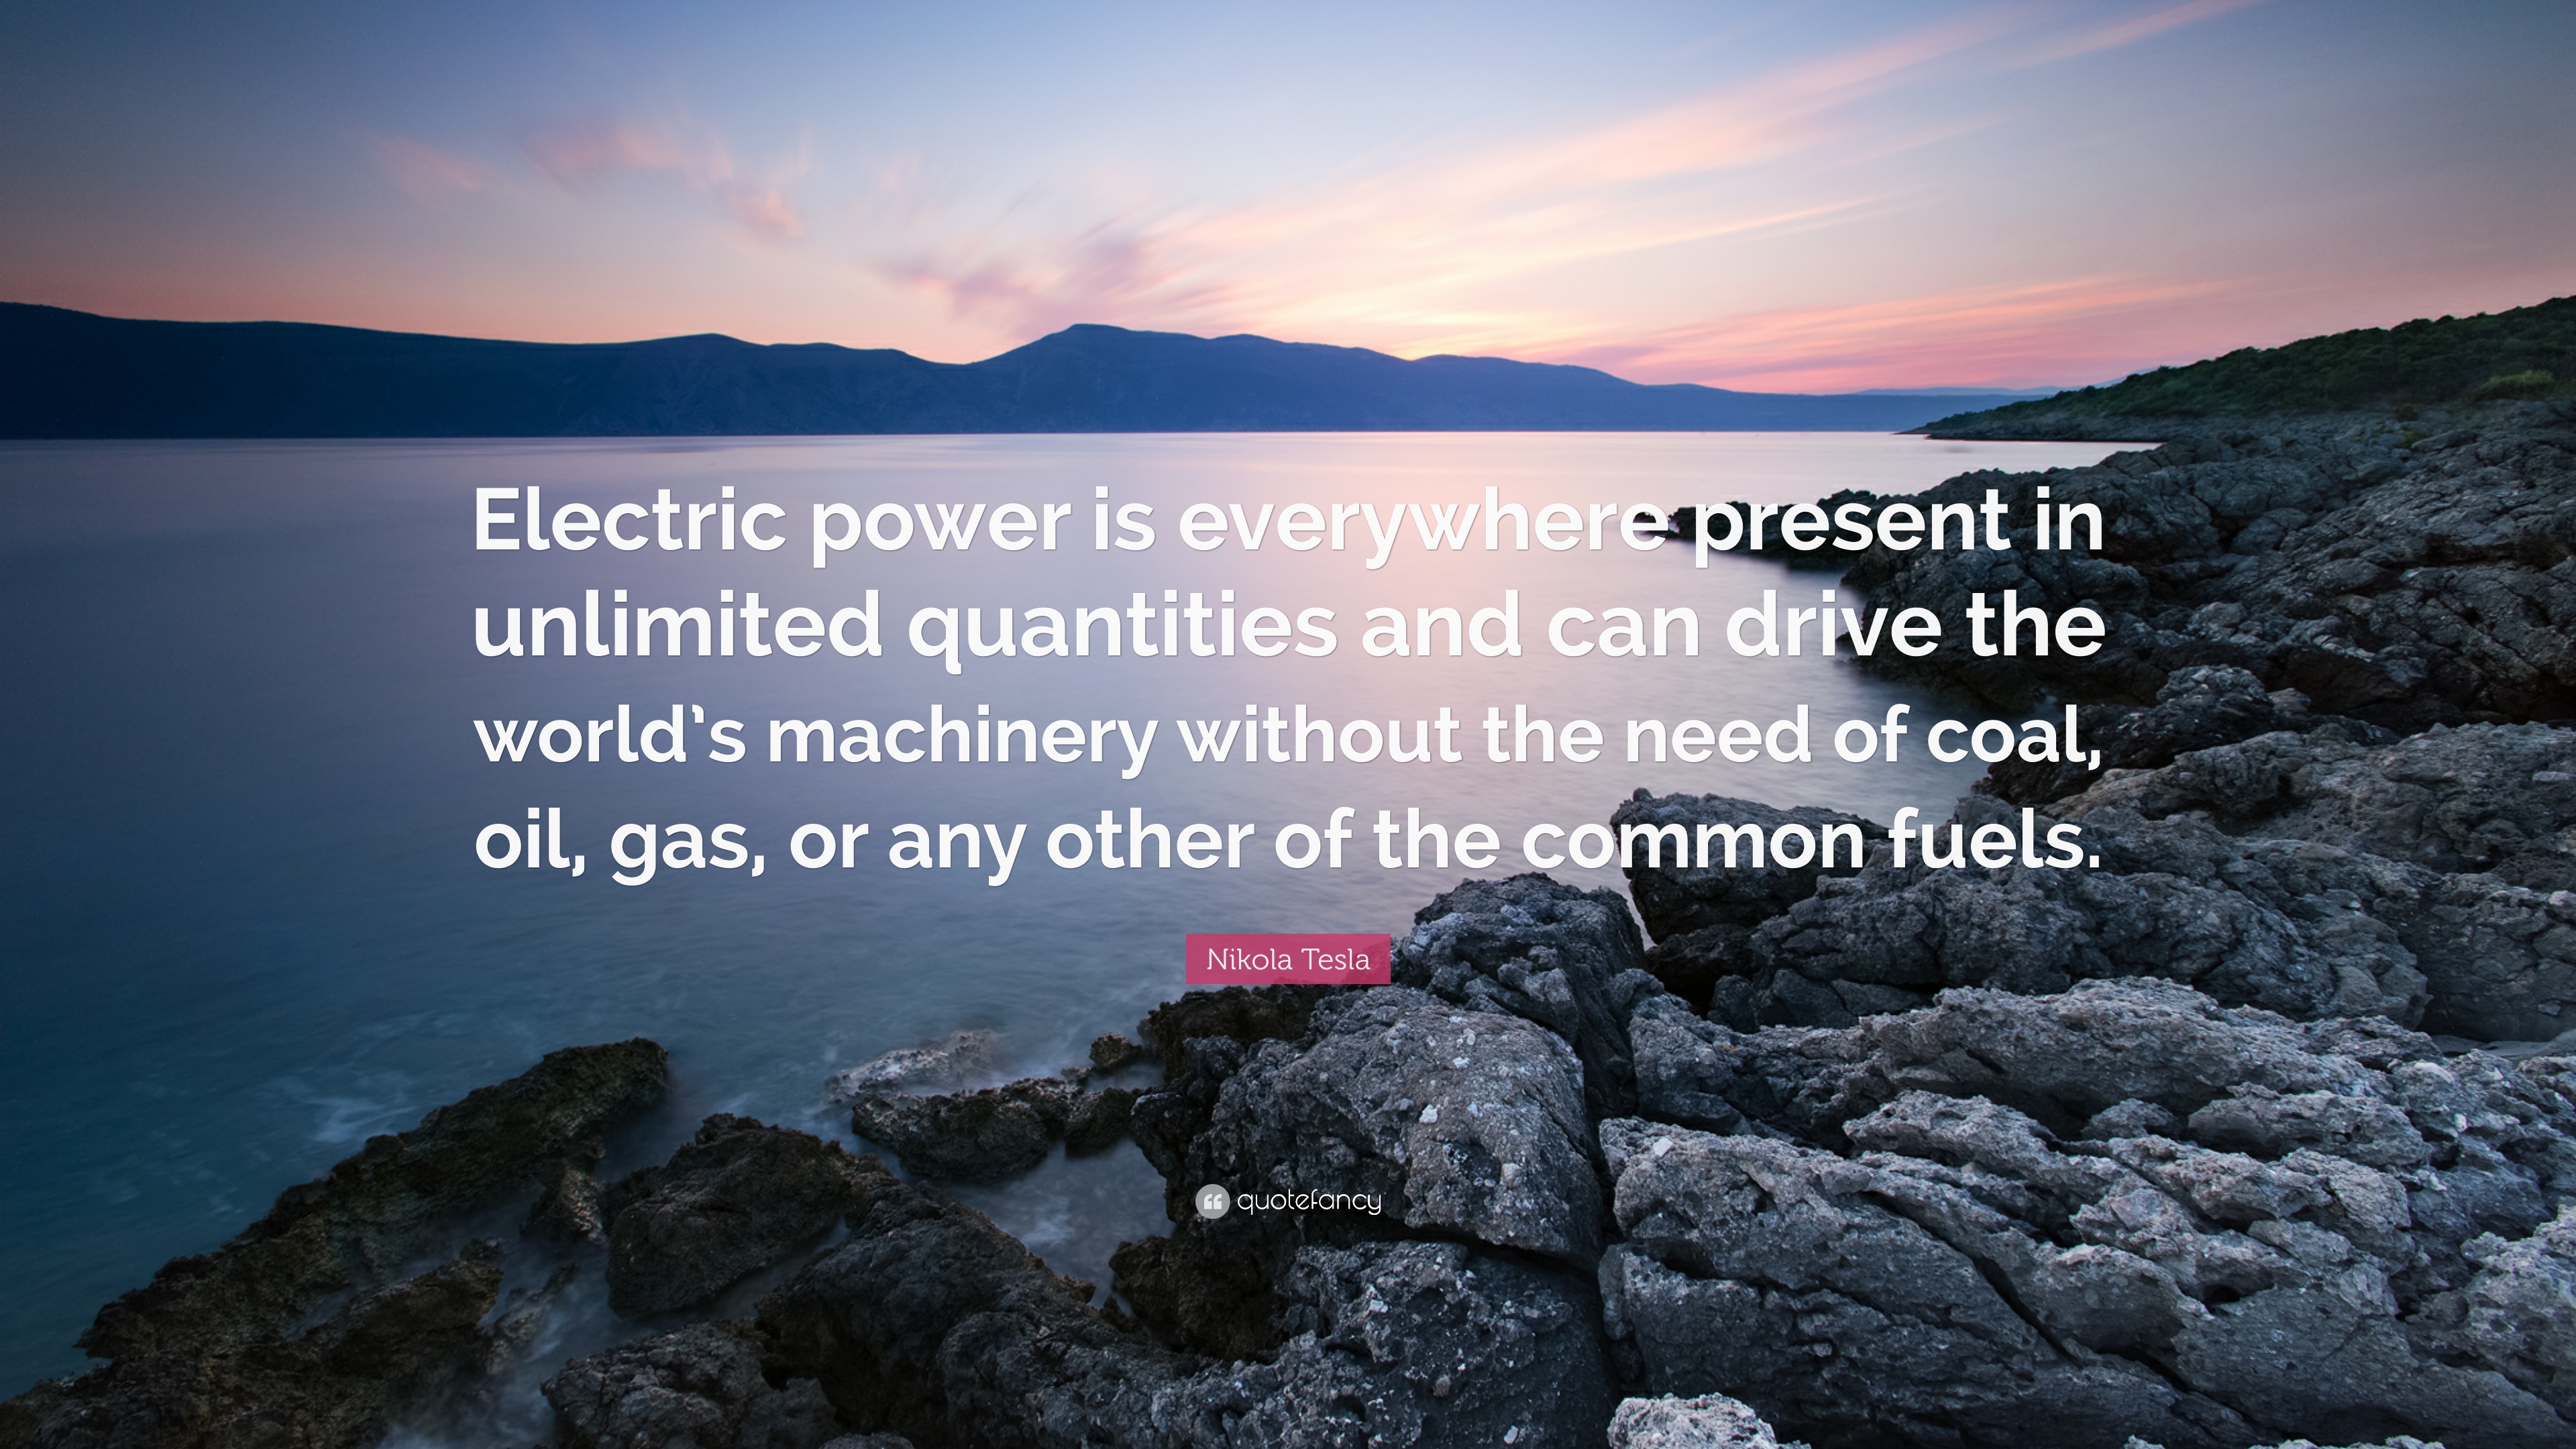 Nikola Tesla Quote: “Electric power is everywhere present